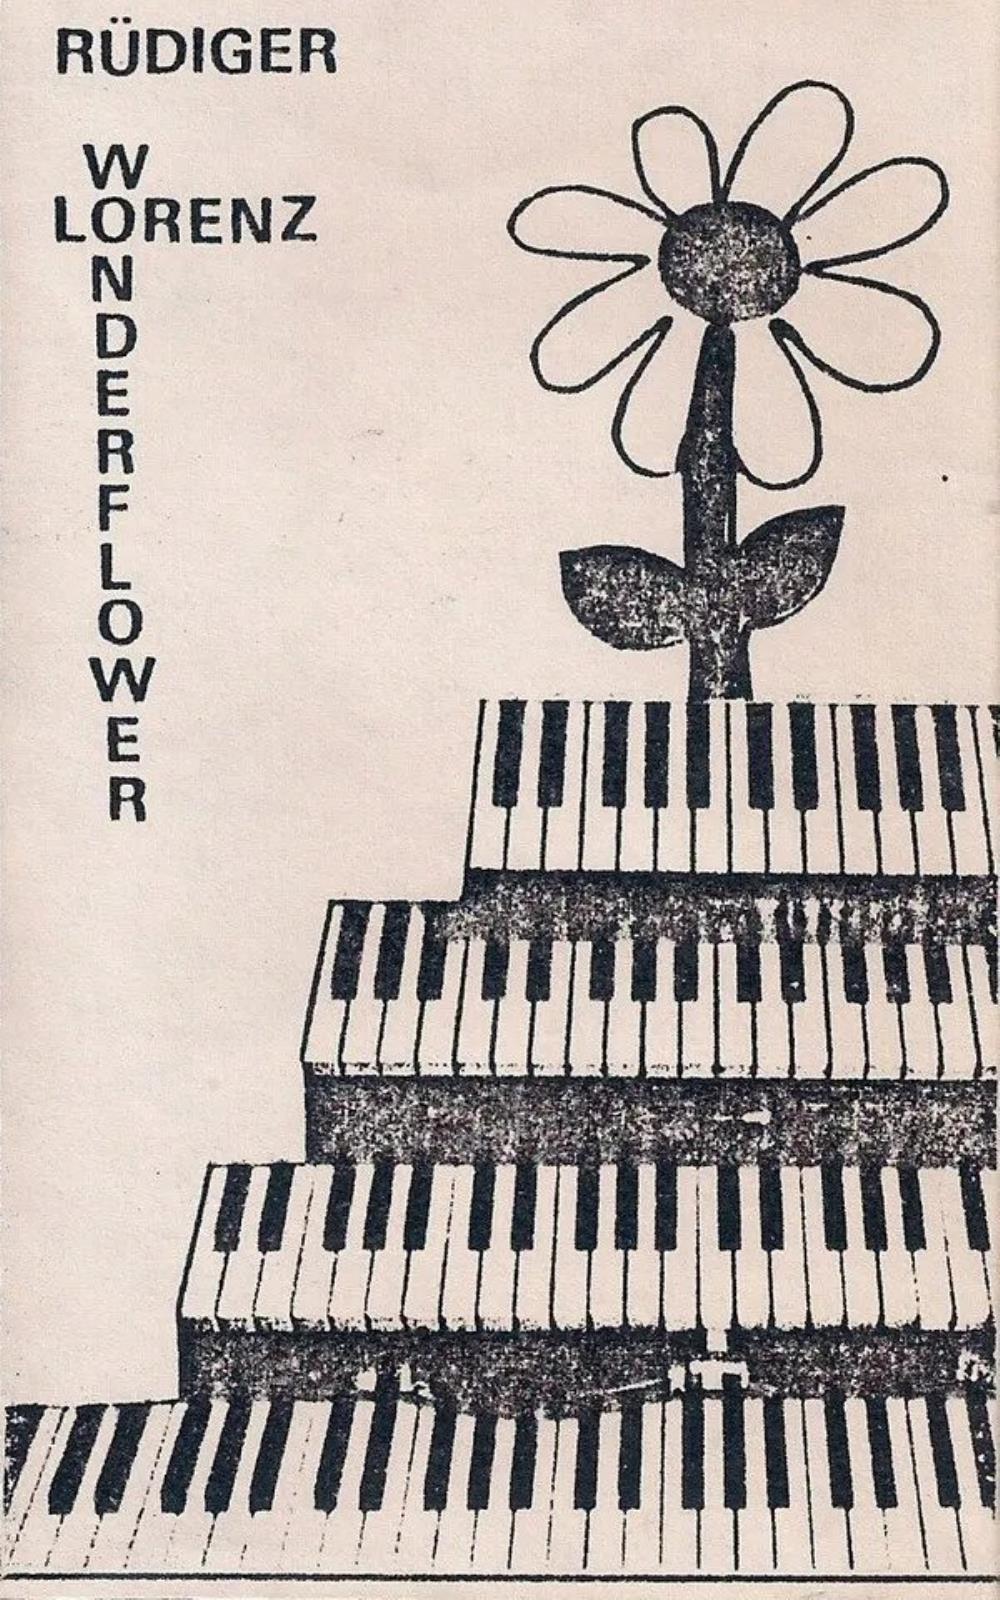 Rdiger Lorenz Wonderflower album cover